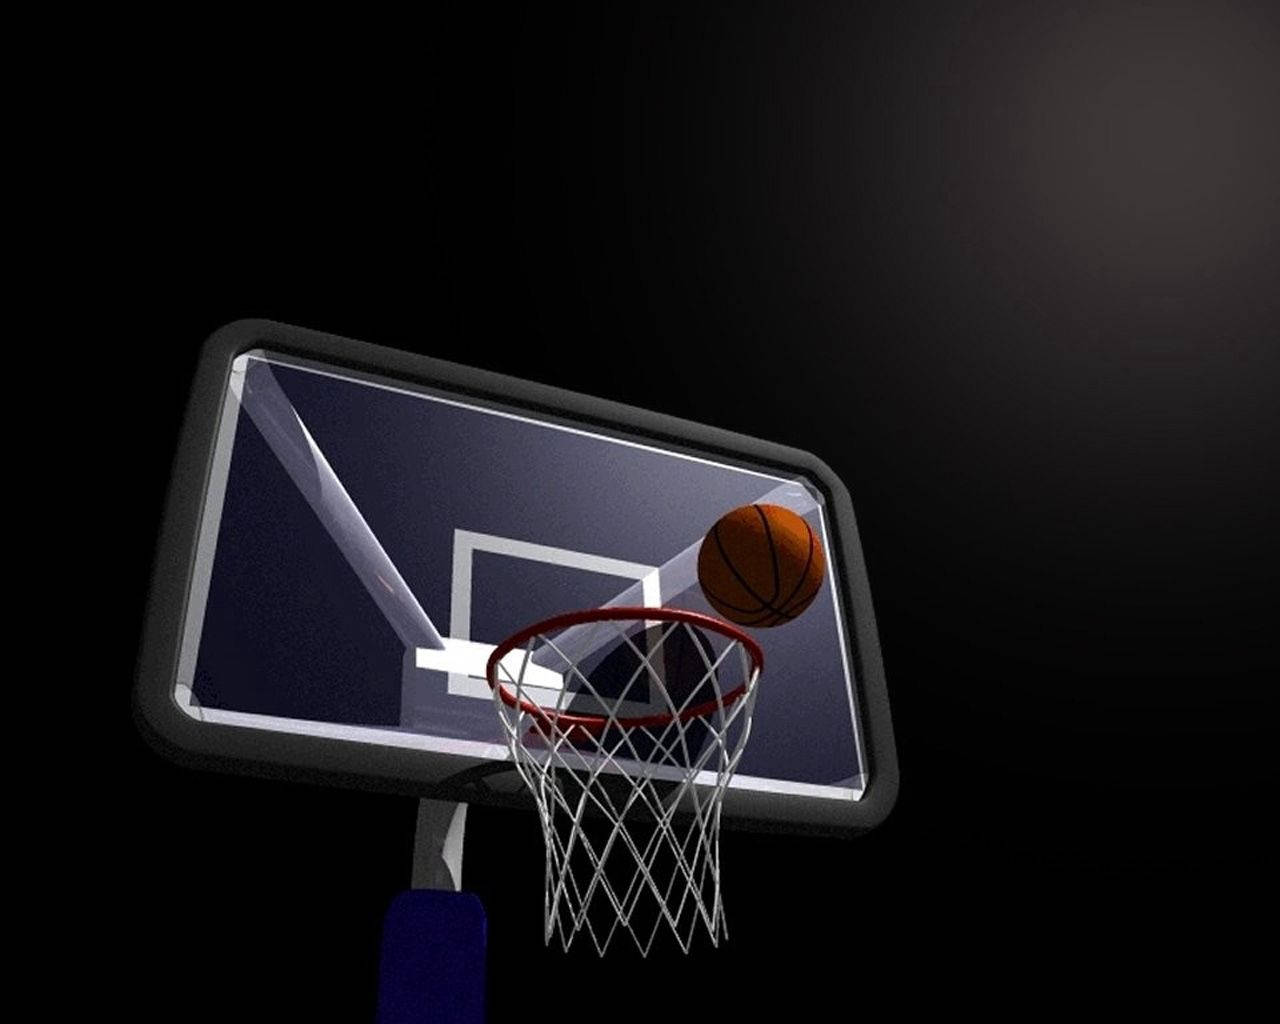 Ball On Basketball Board And Ring